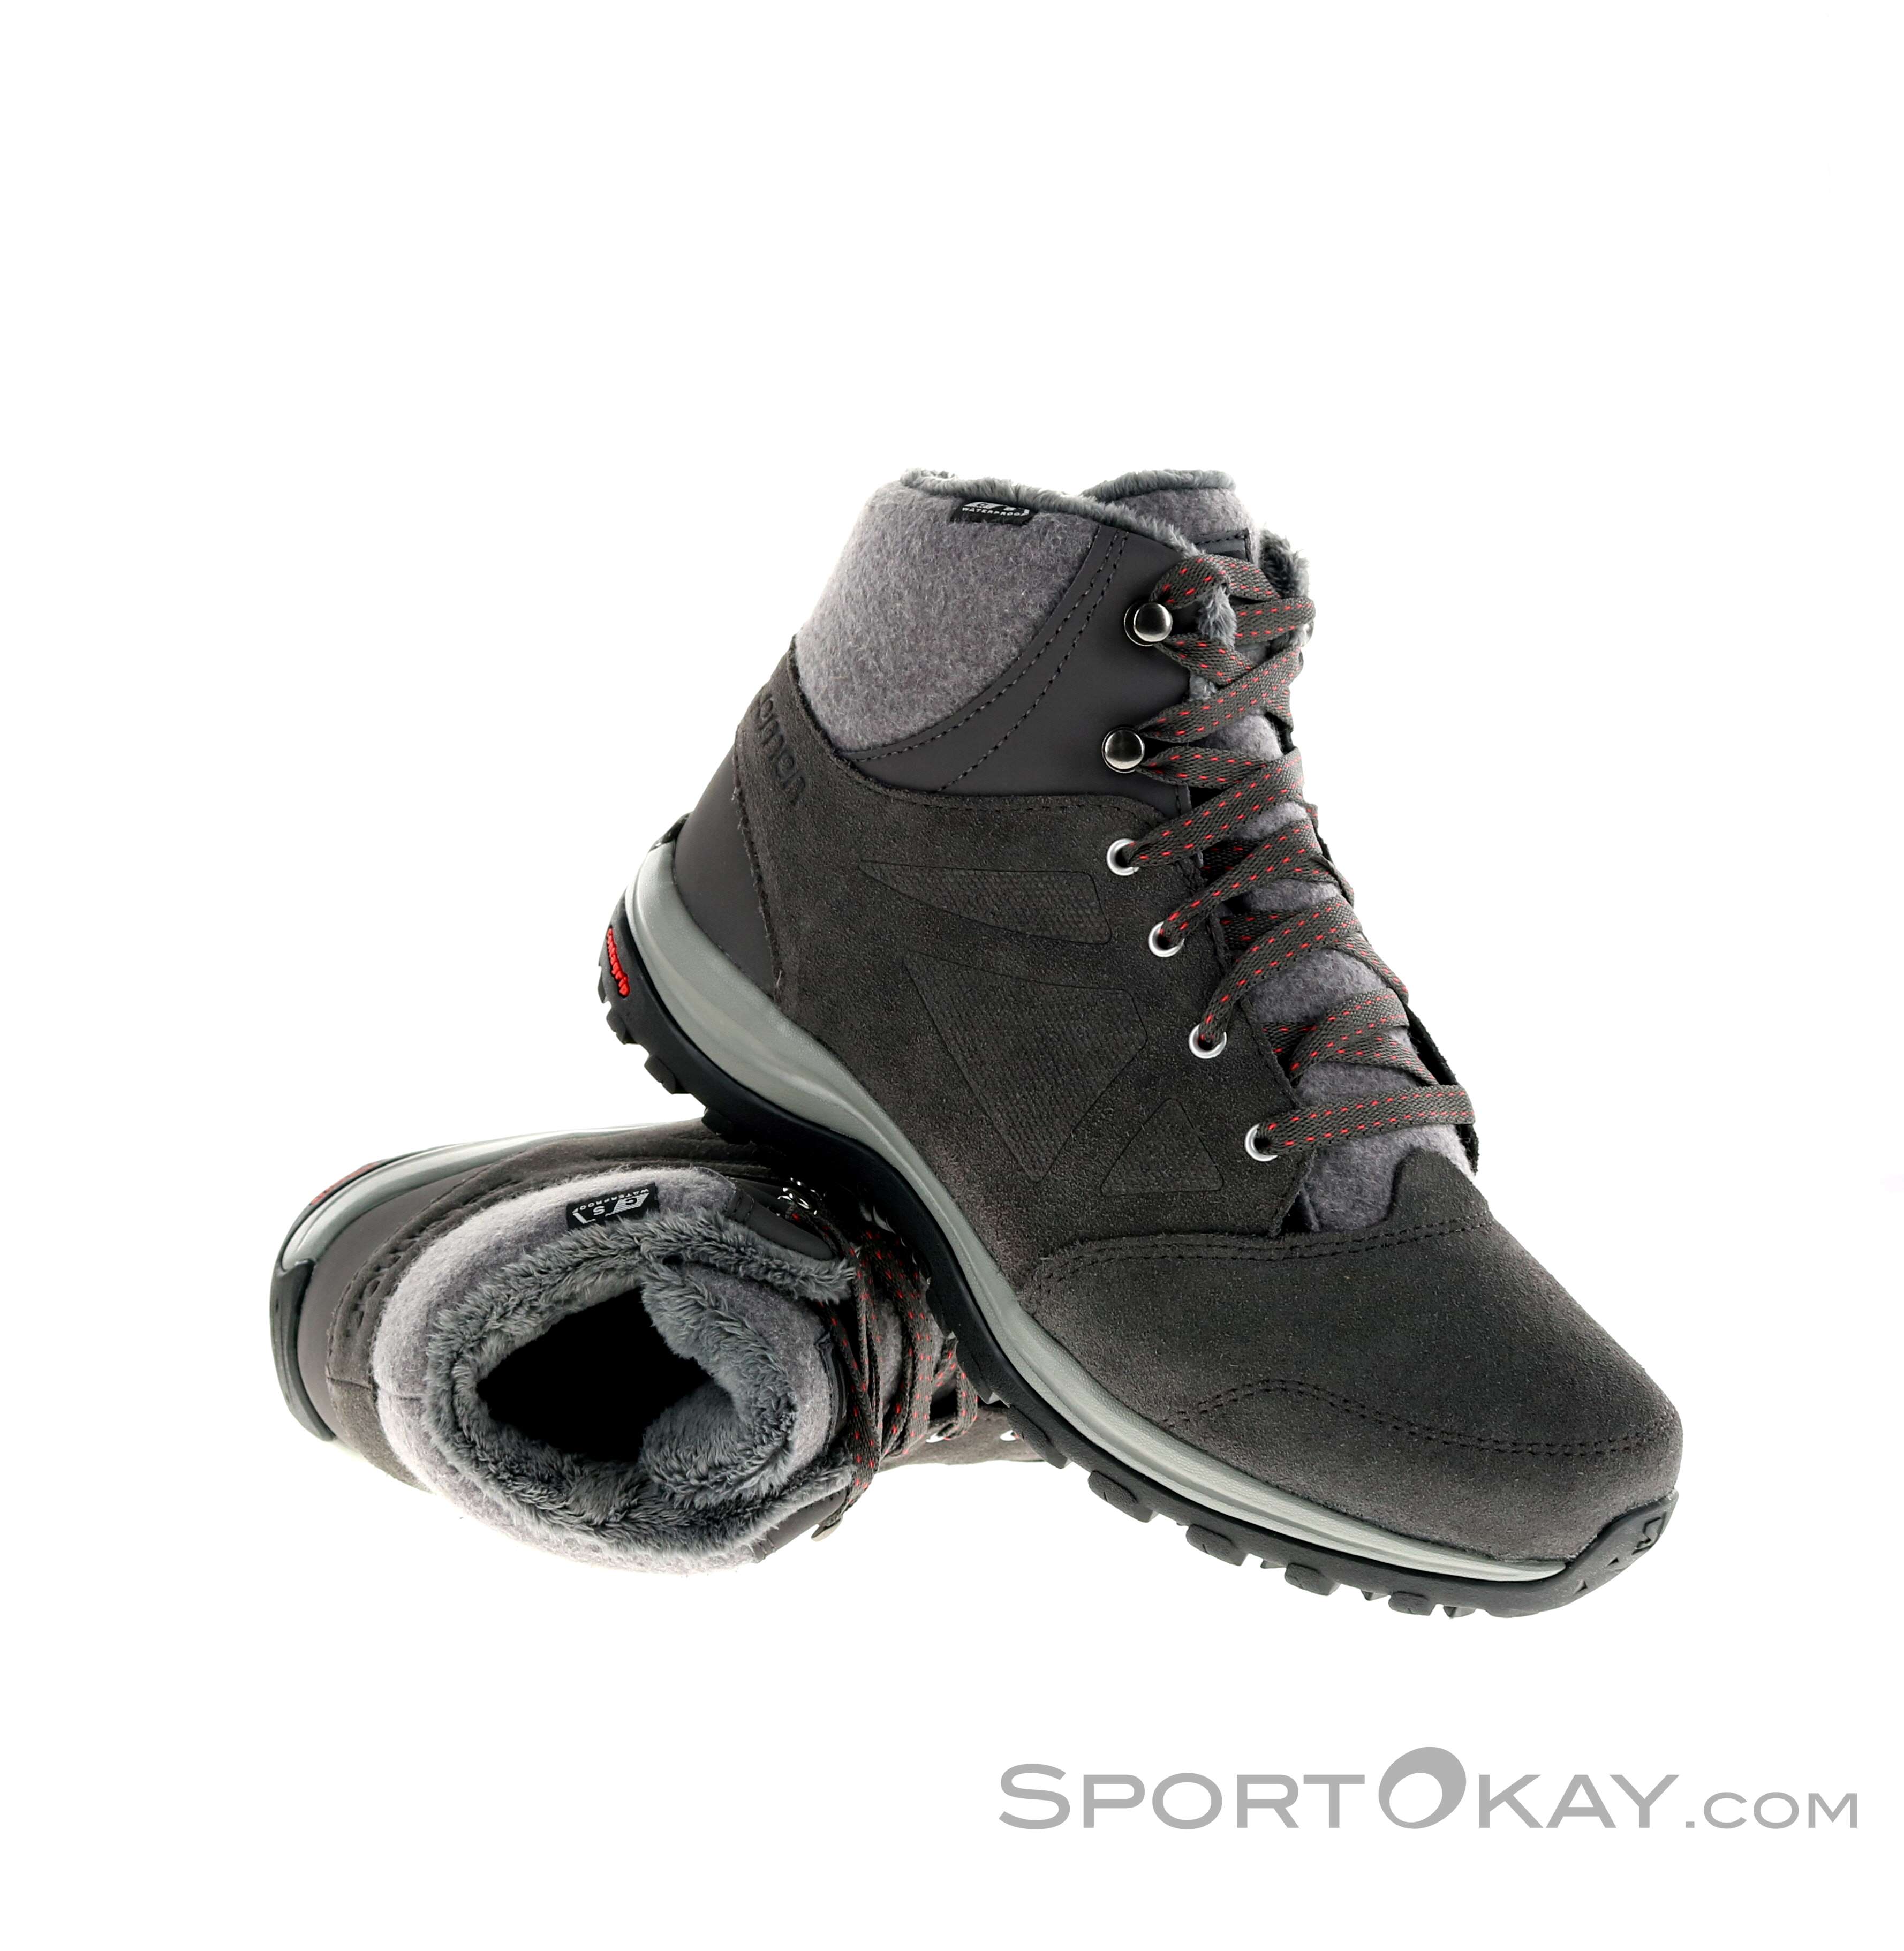 salomon men's utility freeze cs waterproof hiking boot